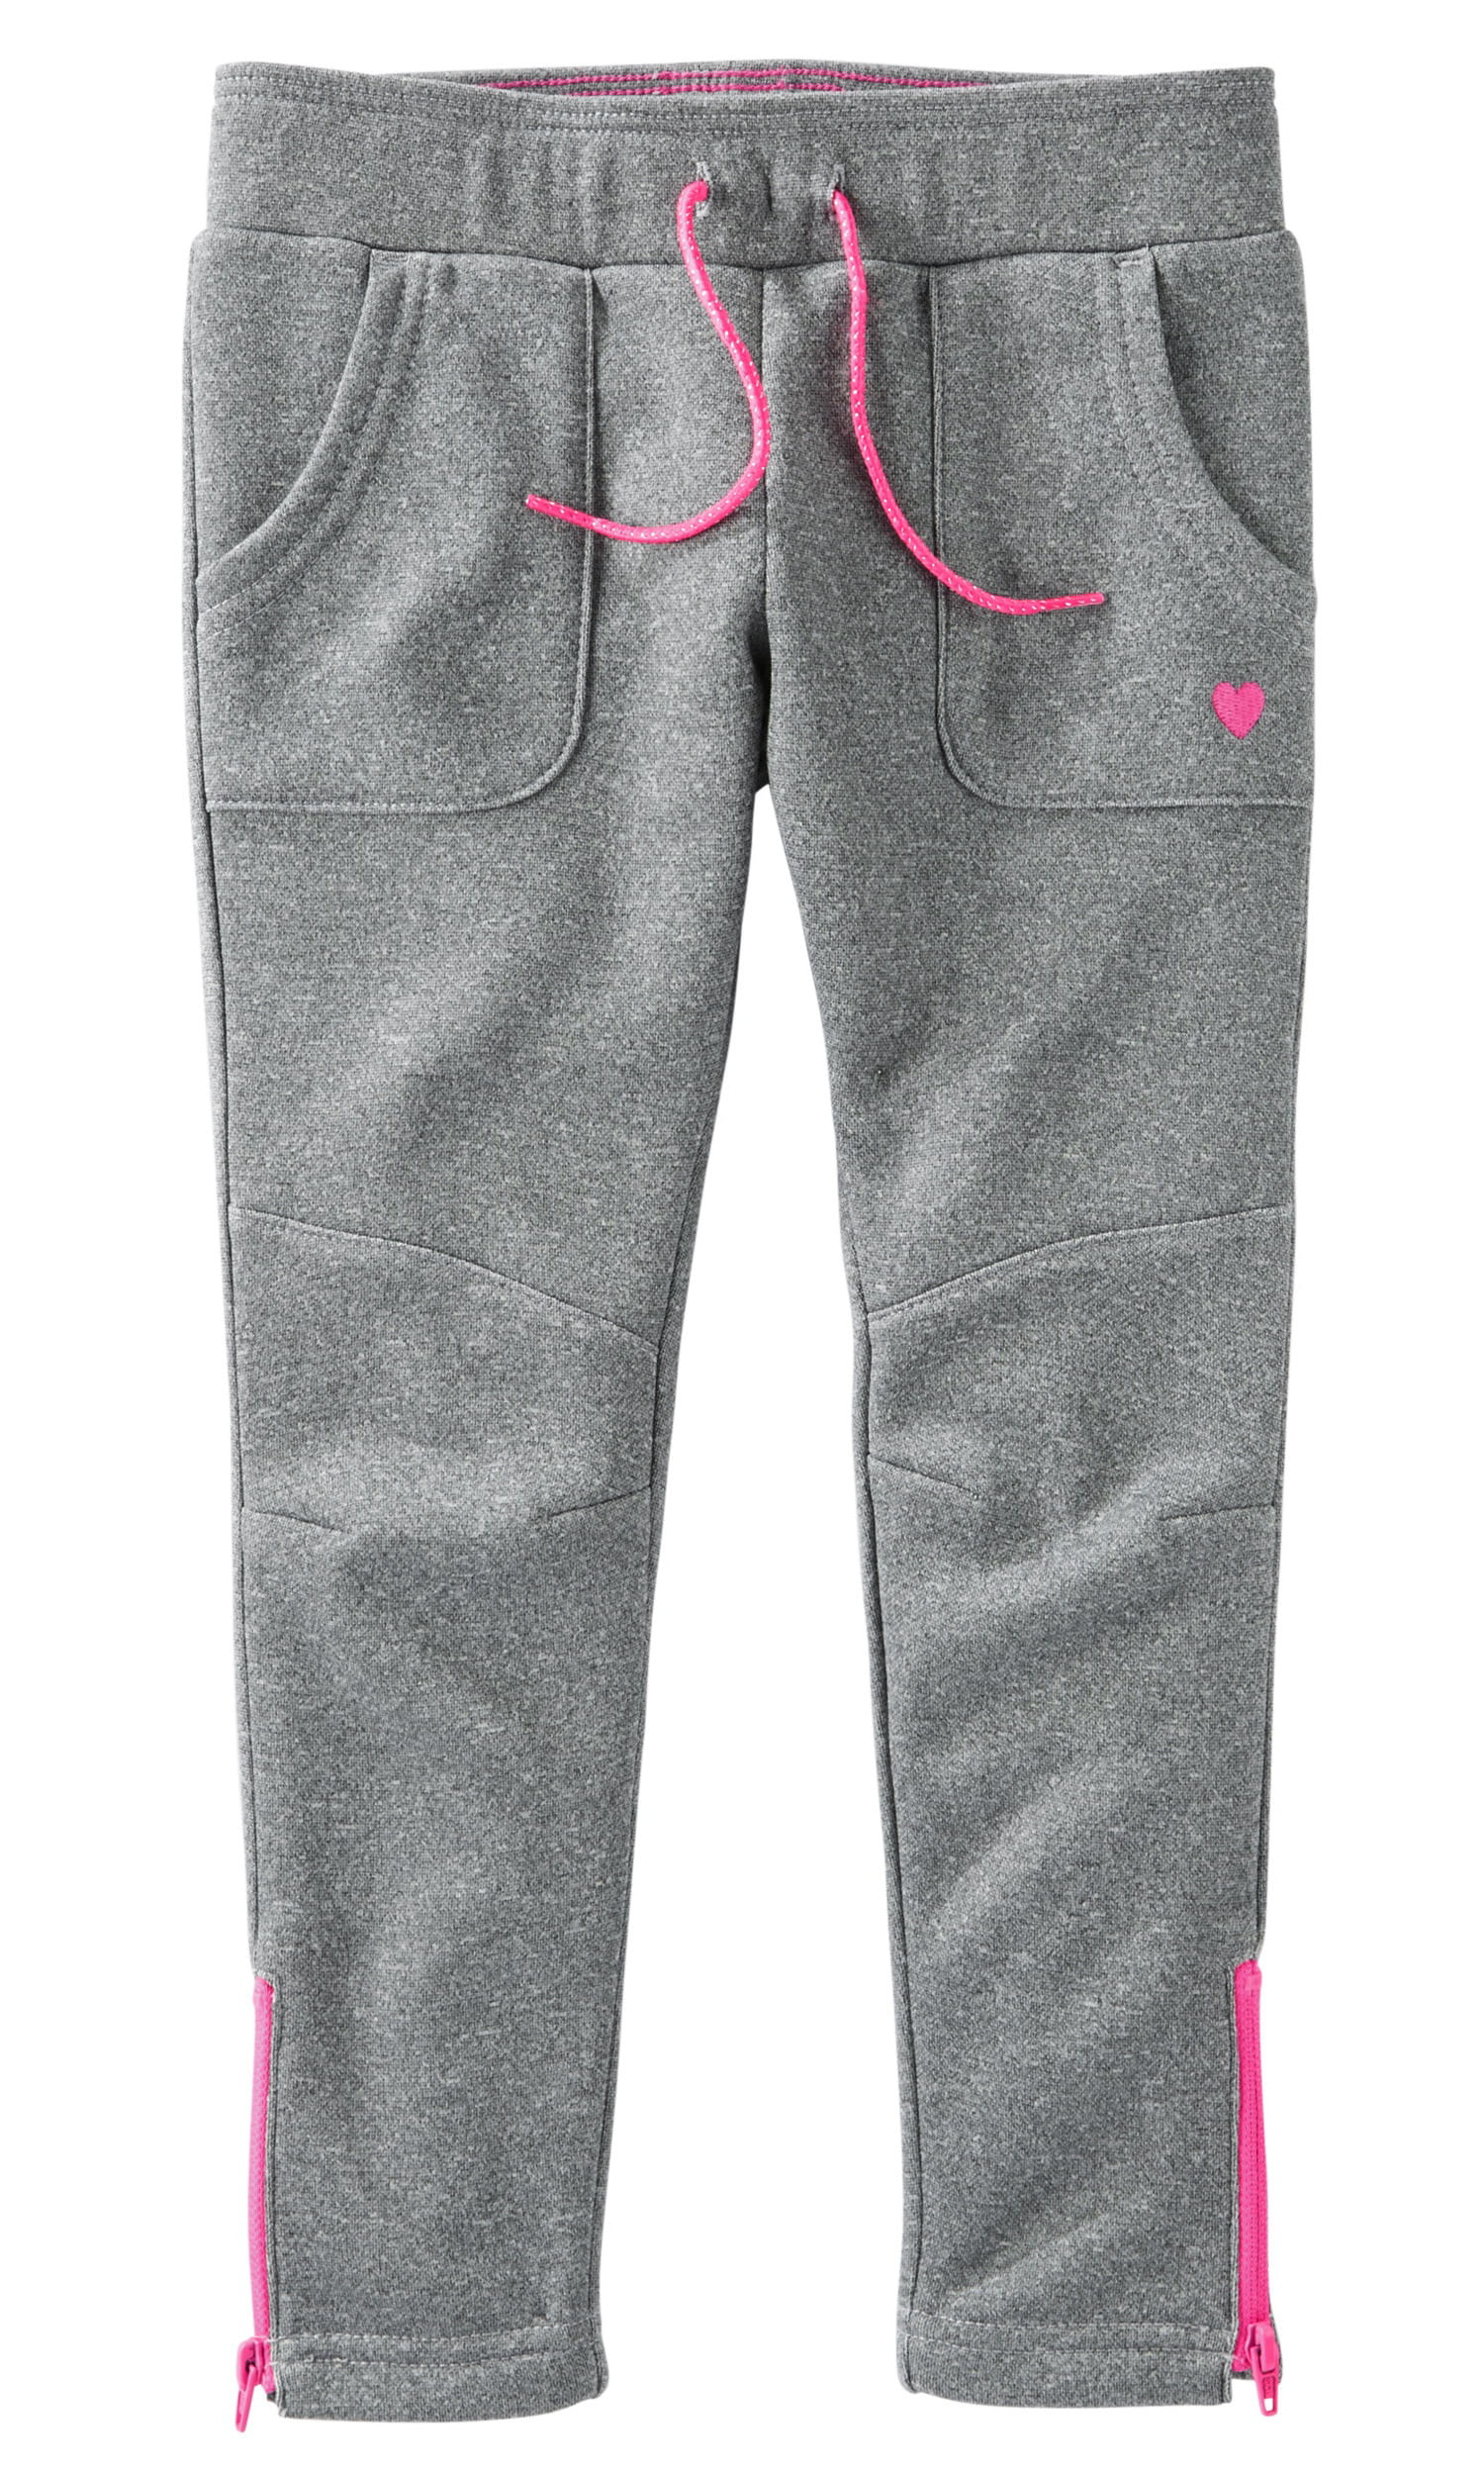 NWT OshKosh B'Gosh Toddler Girls' 3T Gray Sweatpant Leggings w/ Jeweled Trim $26 